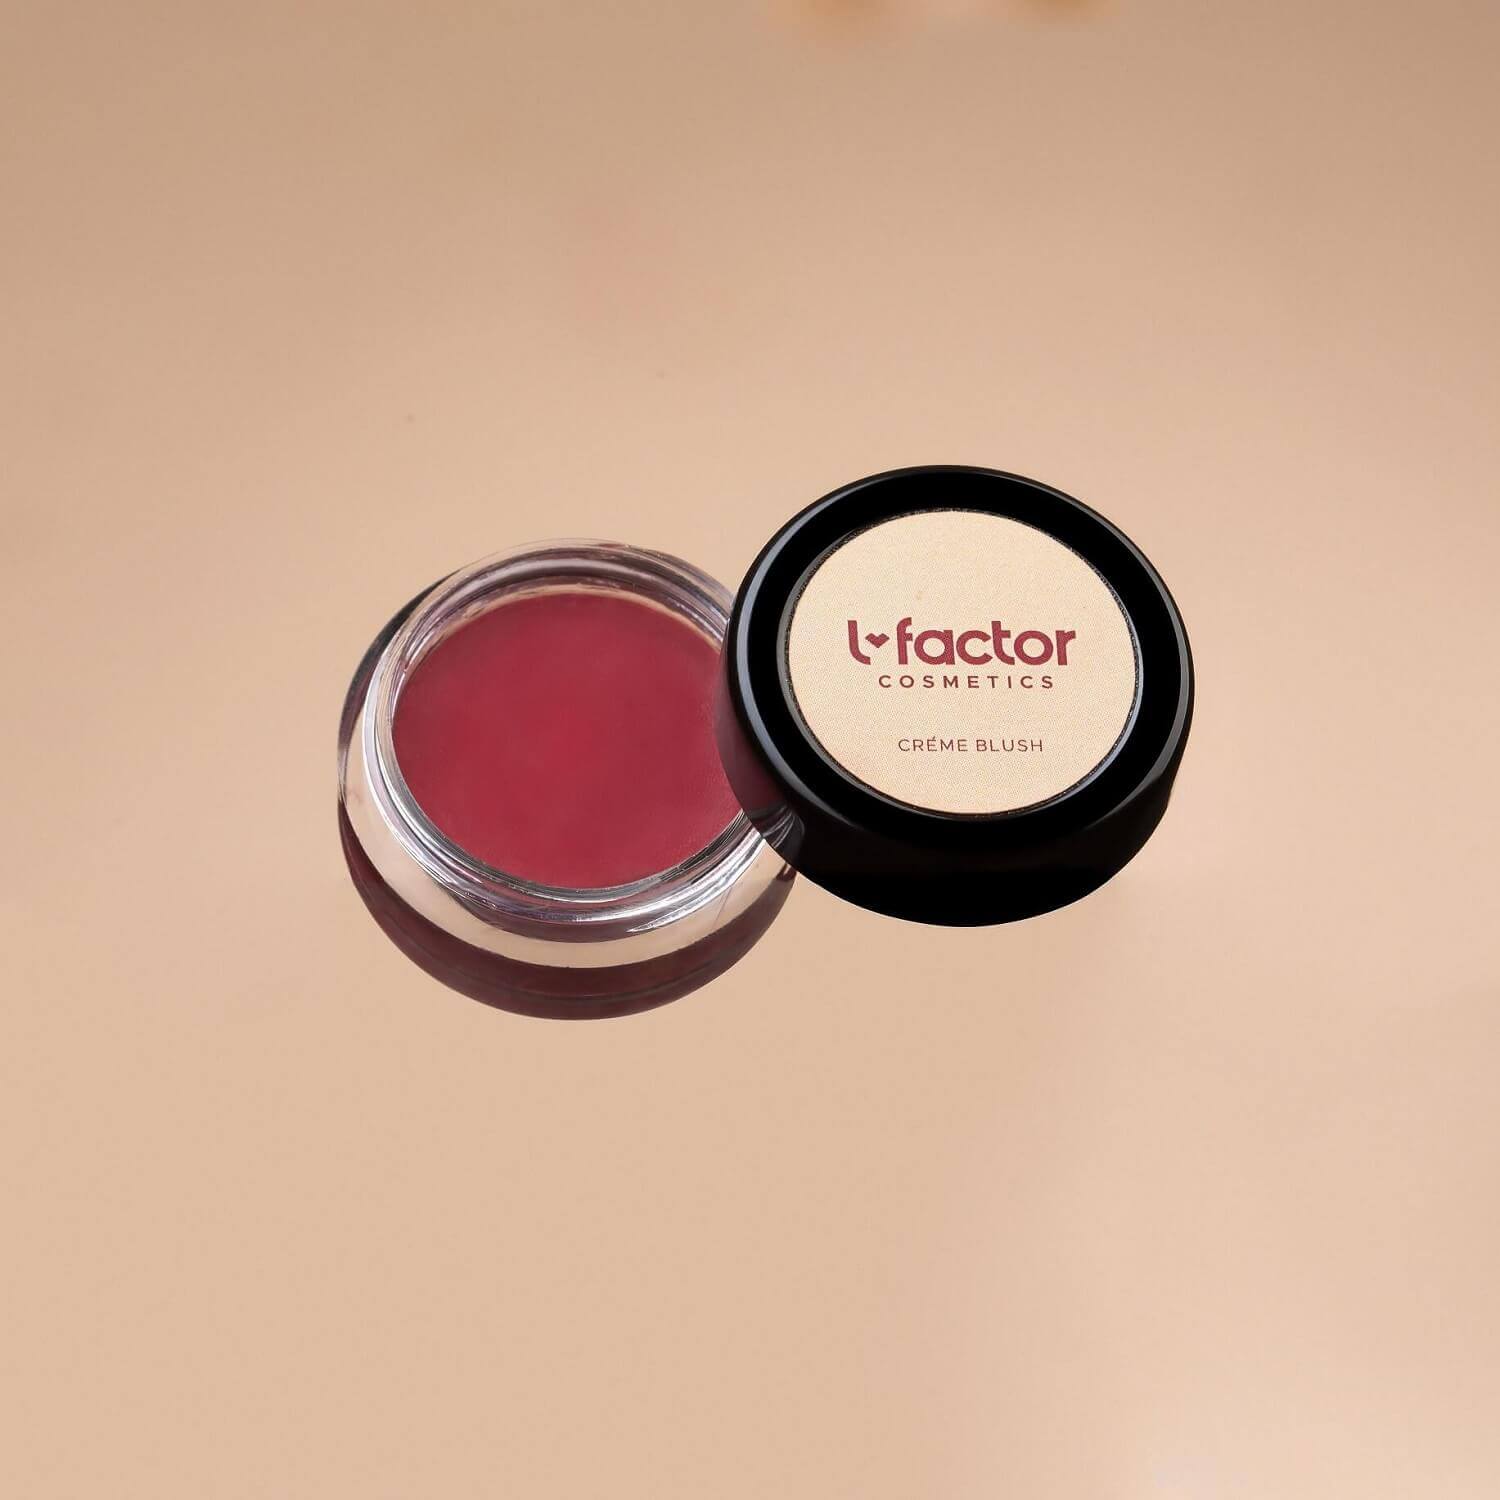 Matte Liquid Lipstick Combo - On the go kit